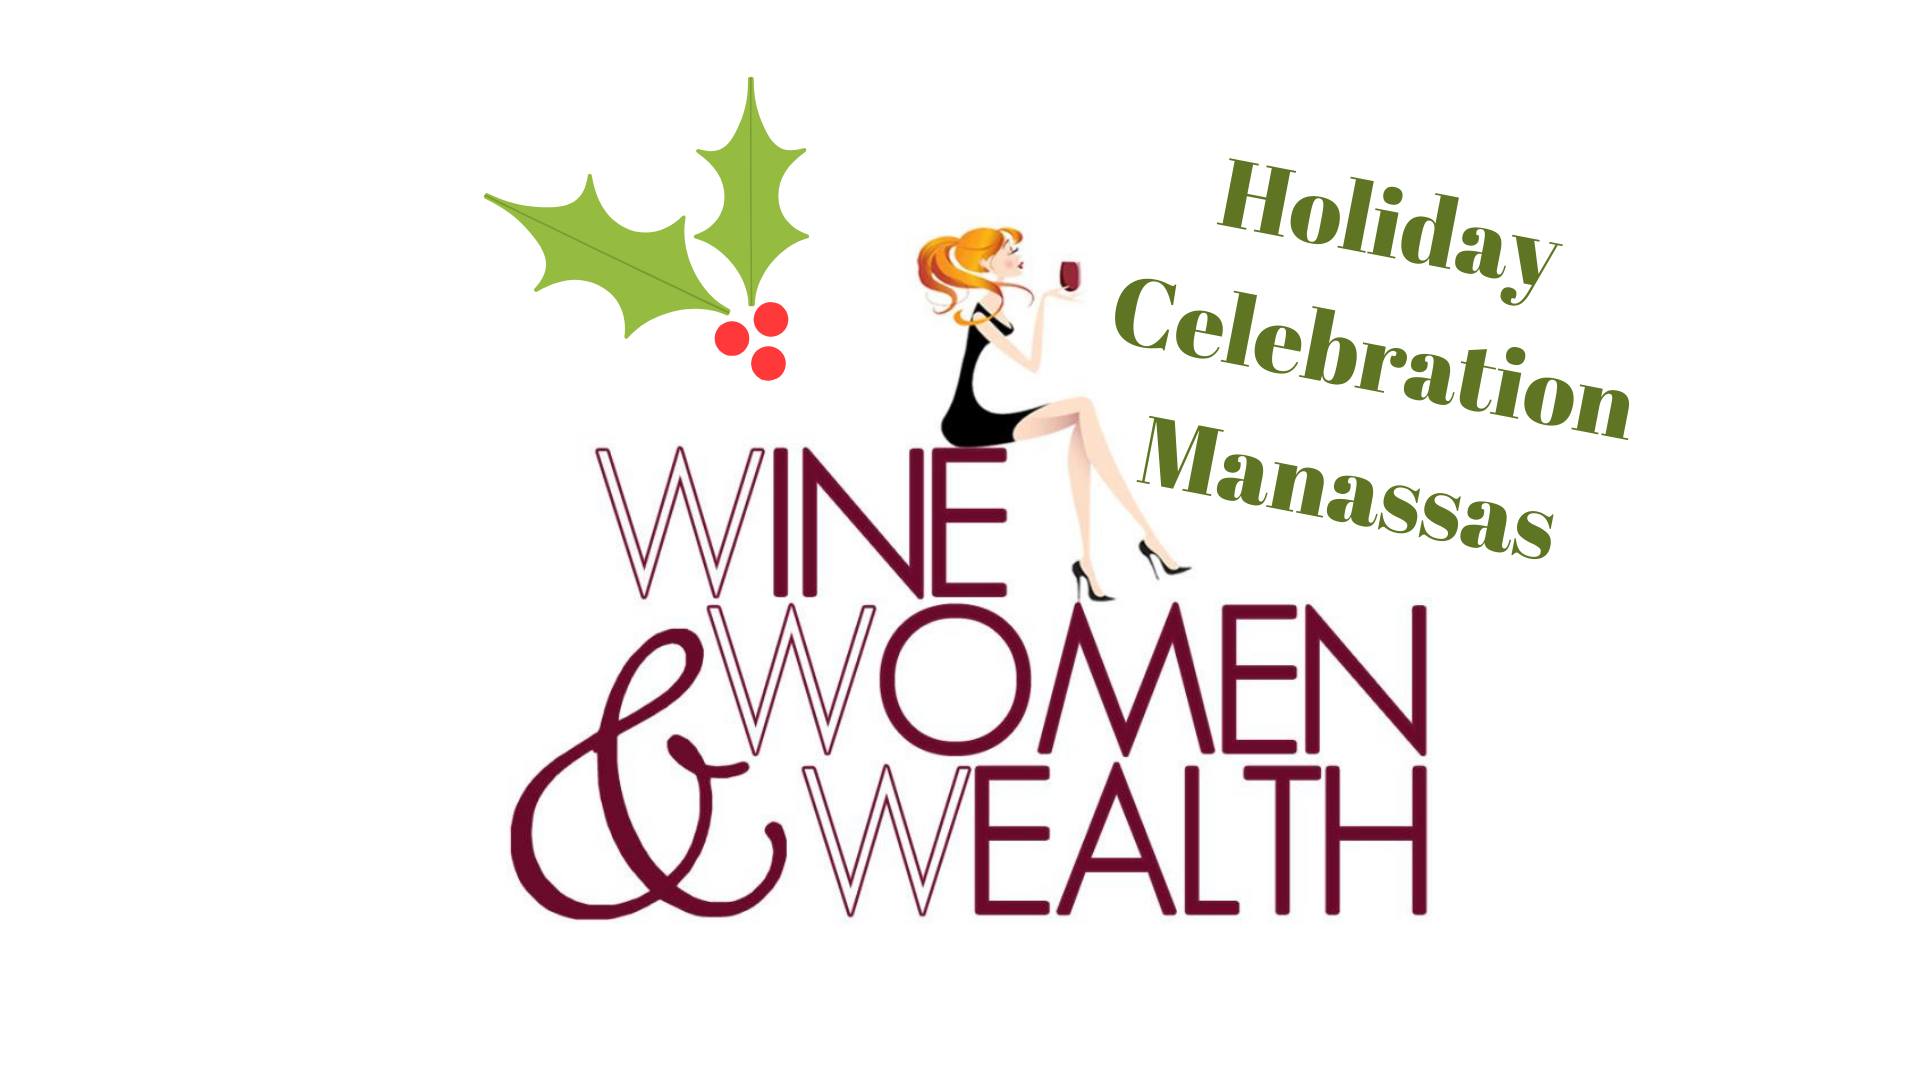 Manassas Logo - Wine, Women and Wealth